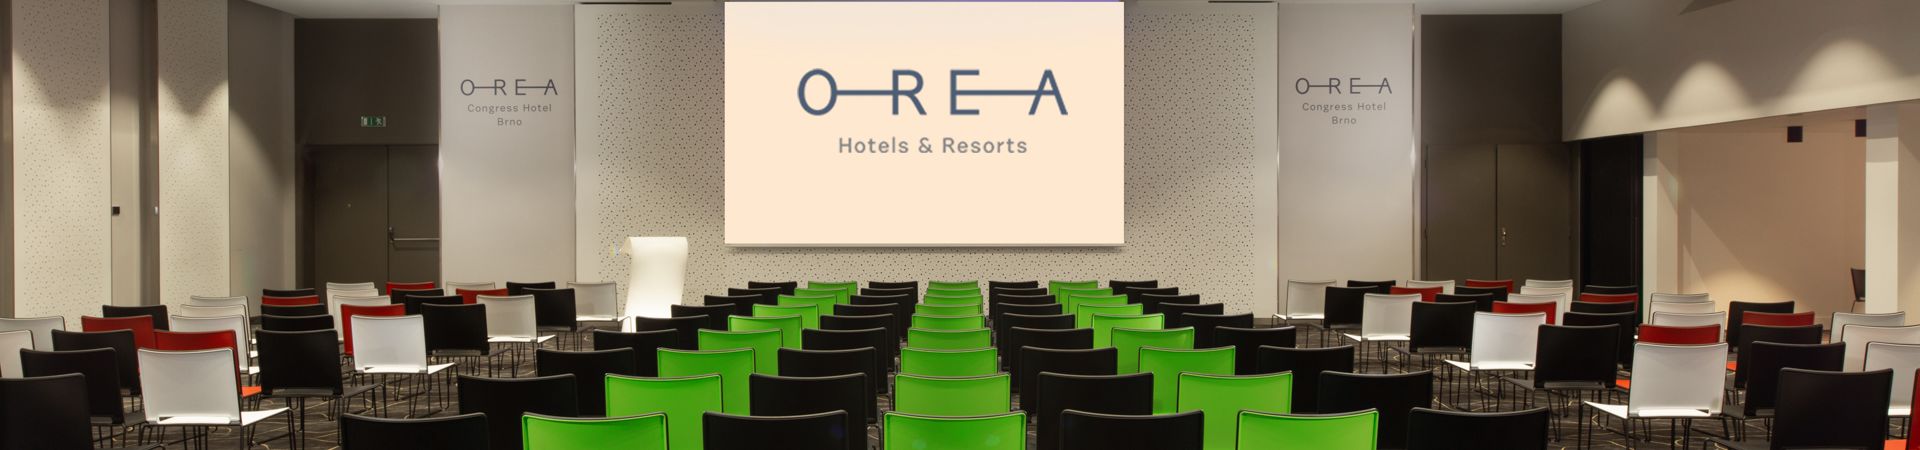 OREA Congress Hotel Brno**** - Kongresová hala B